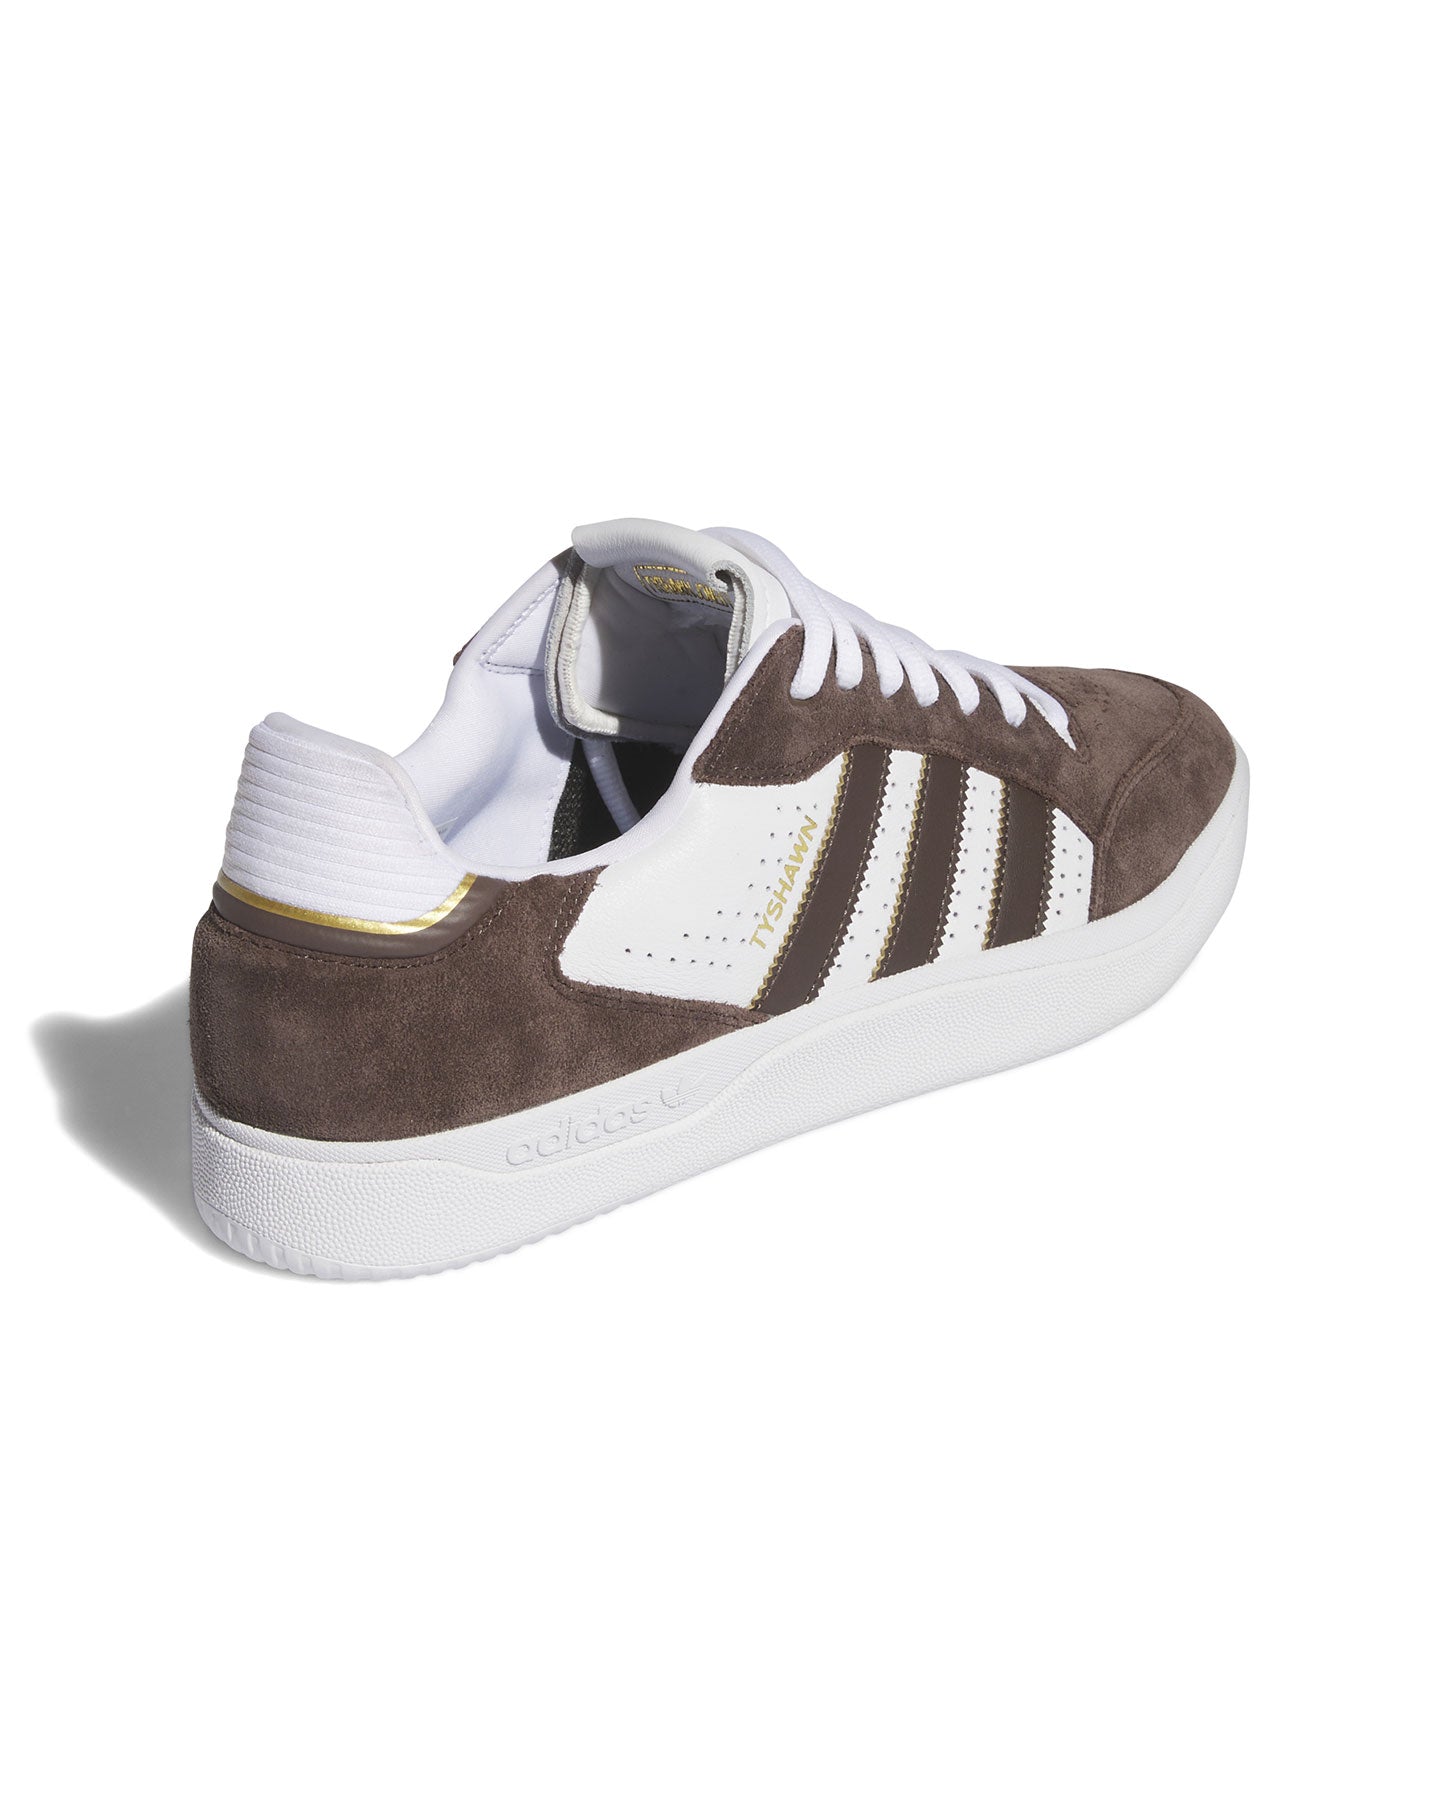 Adidas Tyshawn Low - Brown / White / Gold